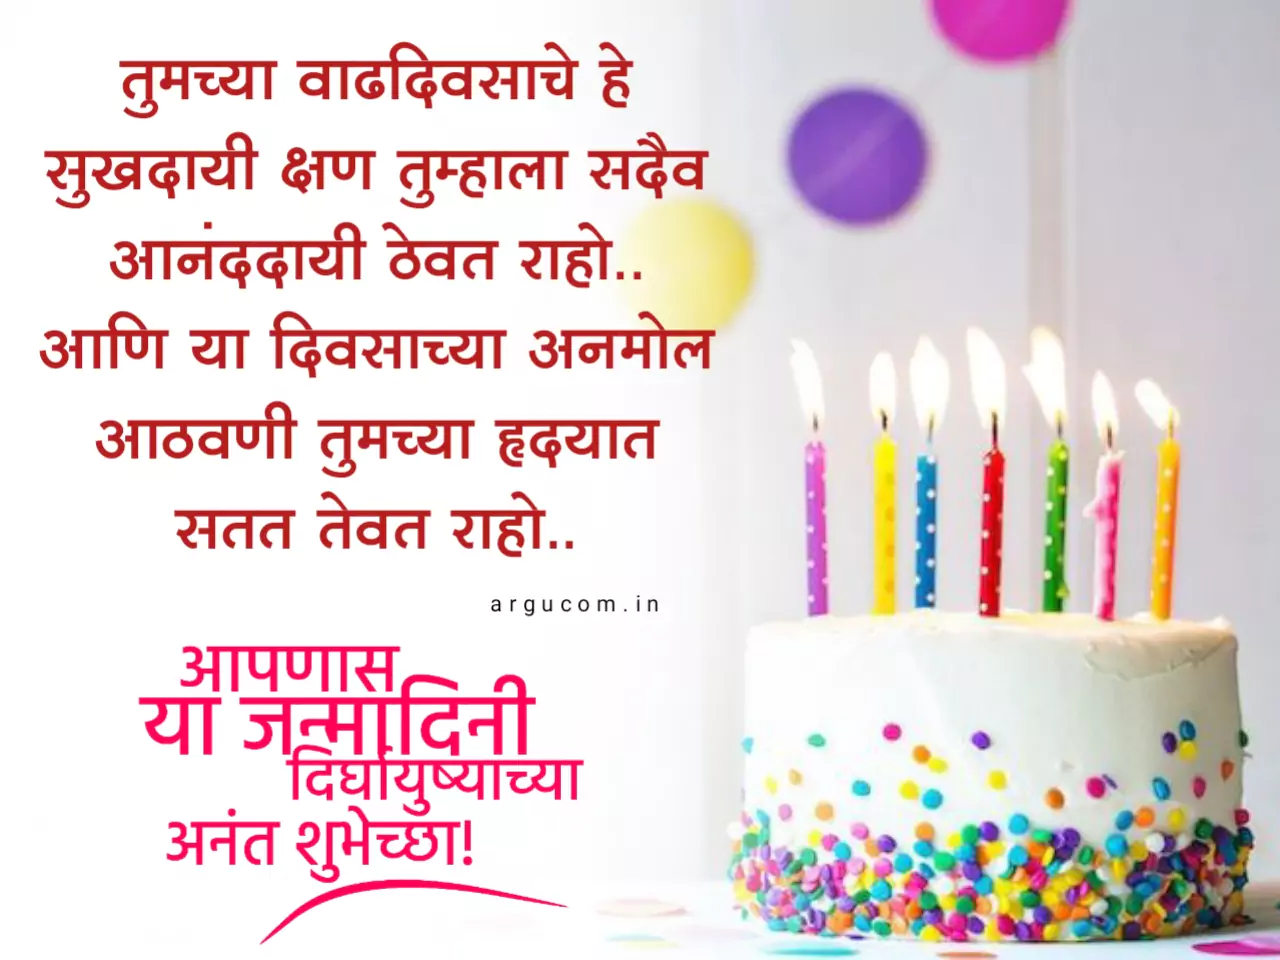 Happy Birthday messages in marathi